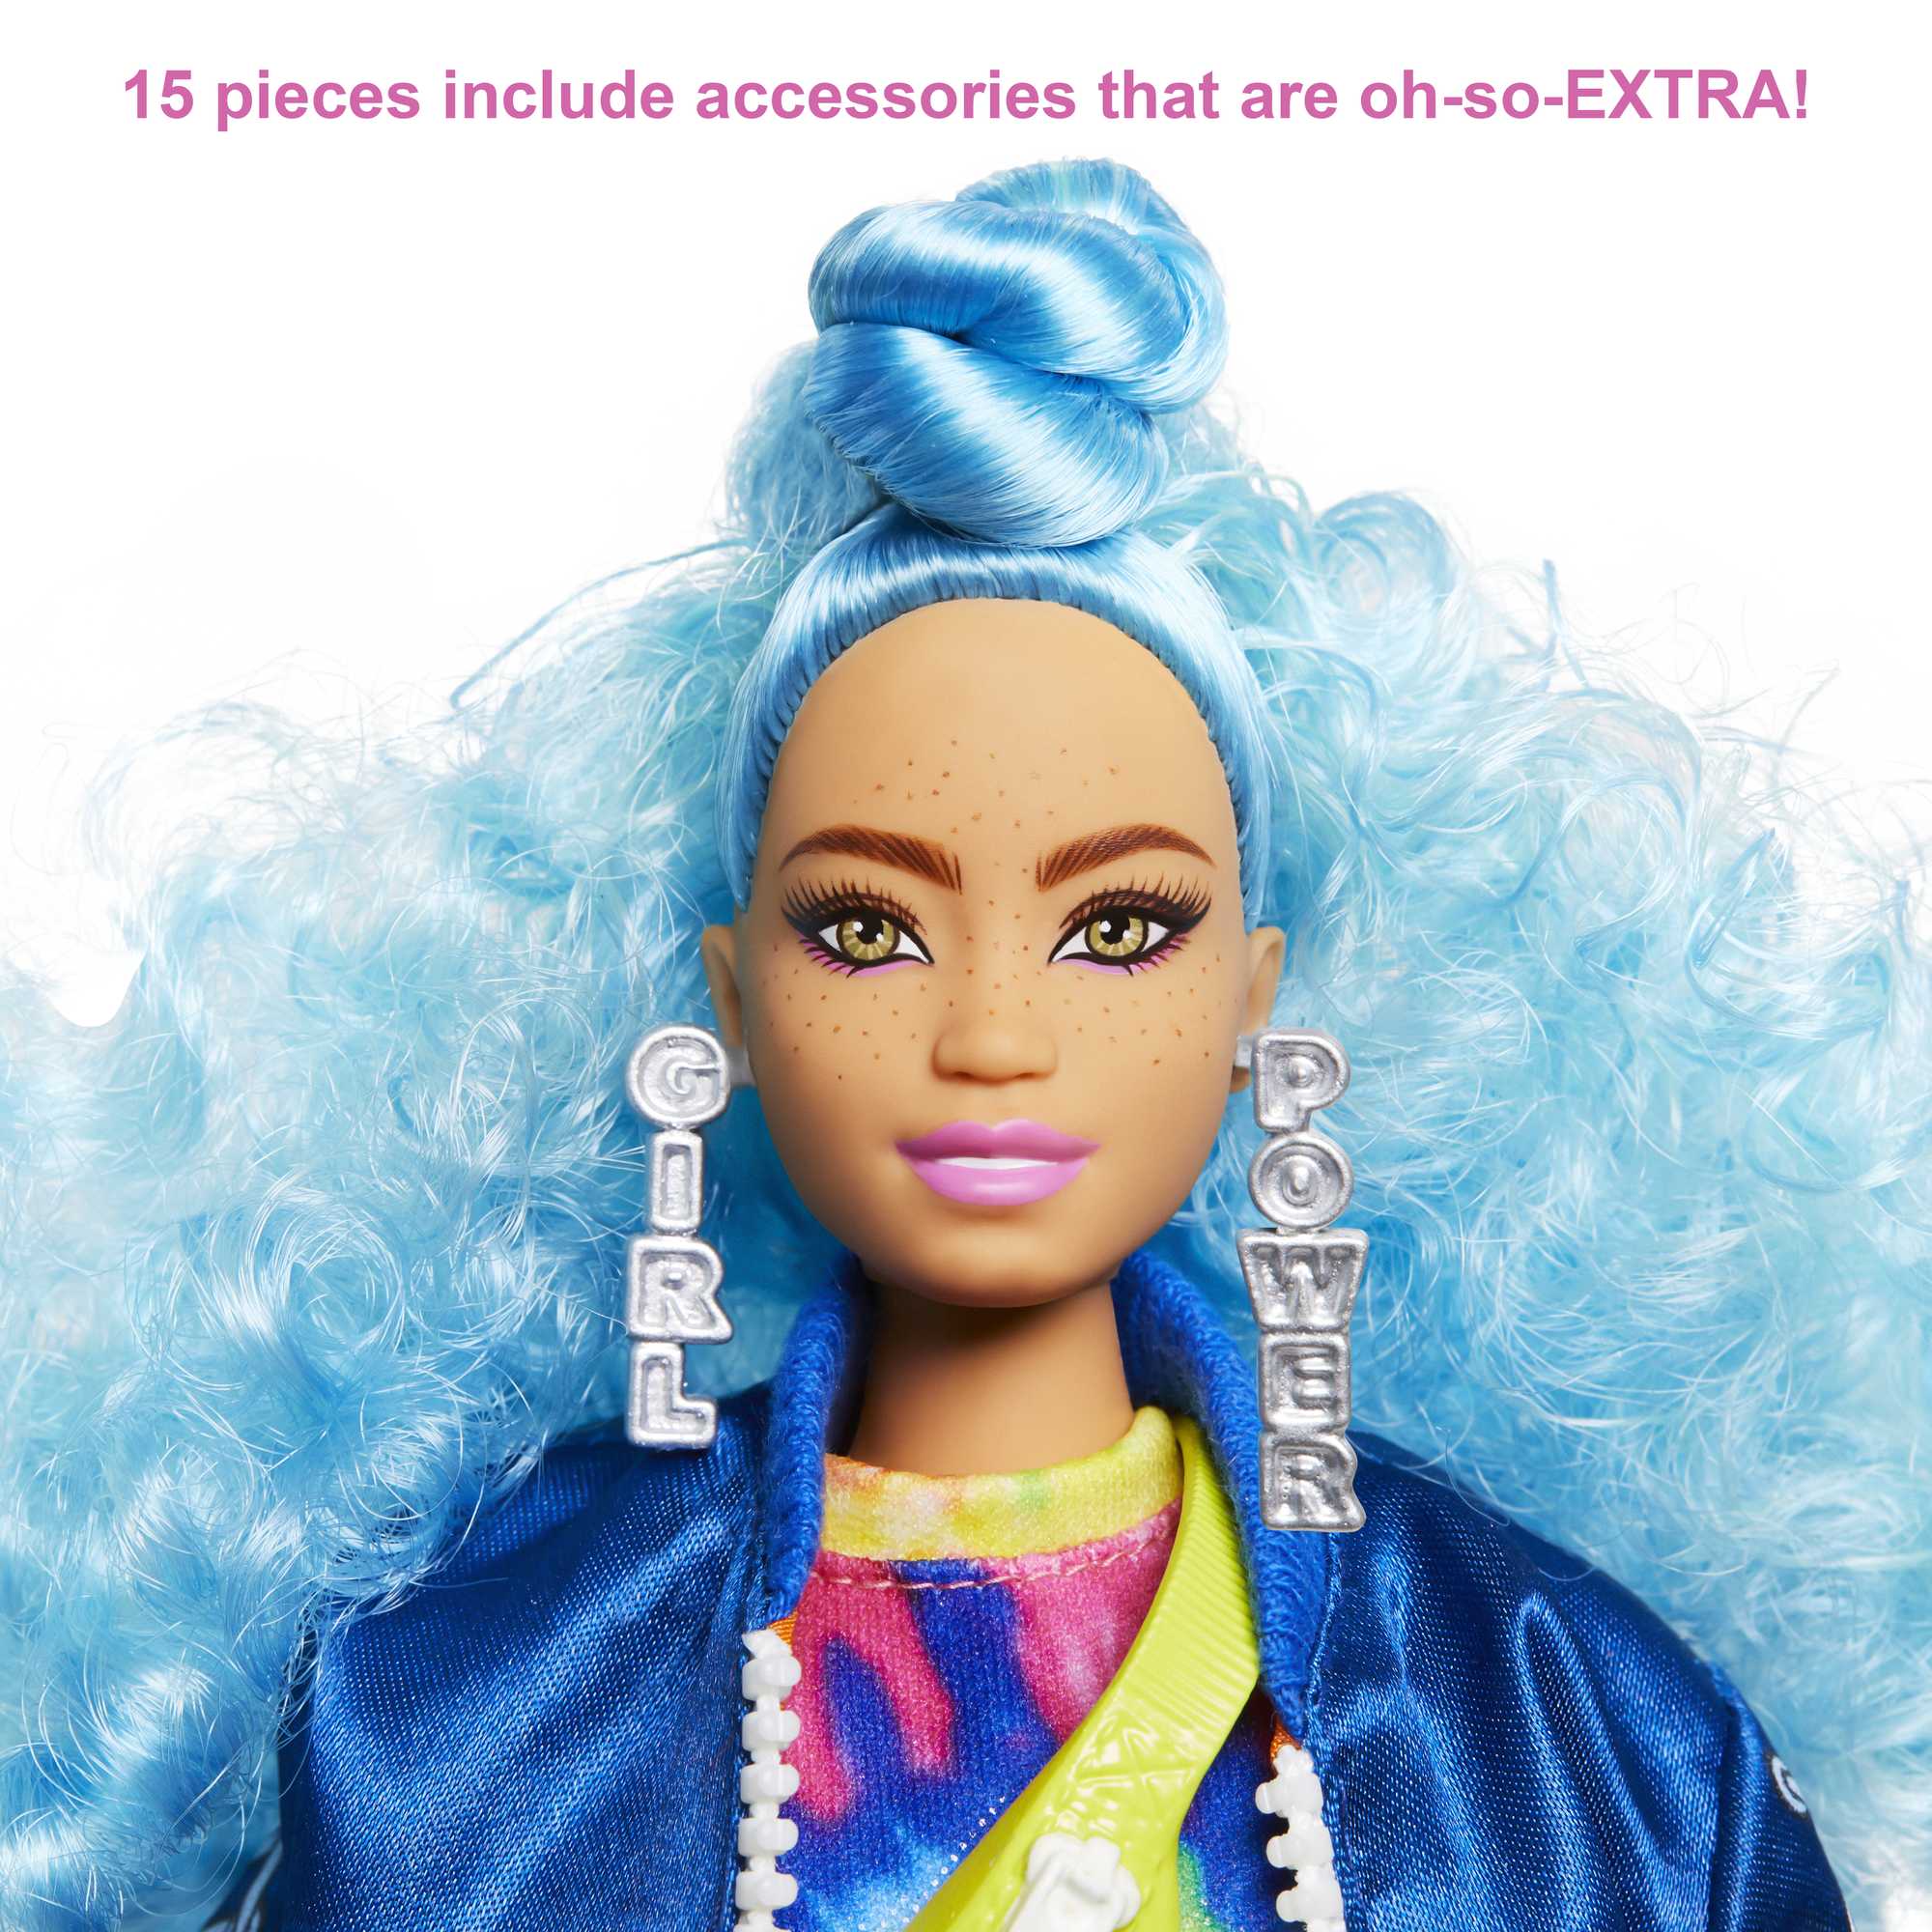 Barbie Entry Doll 4